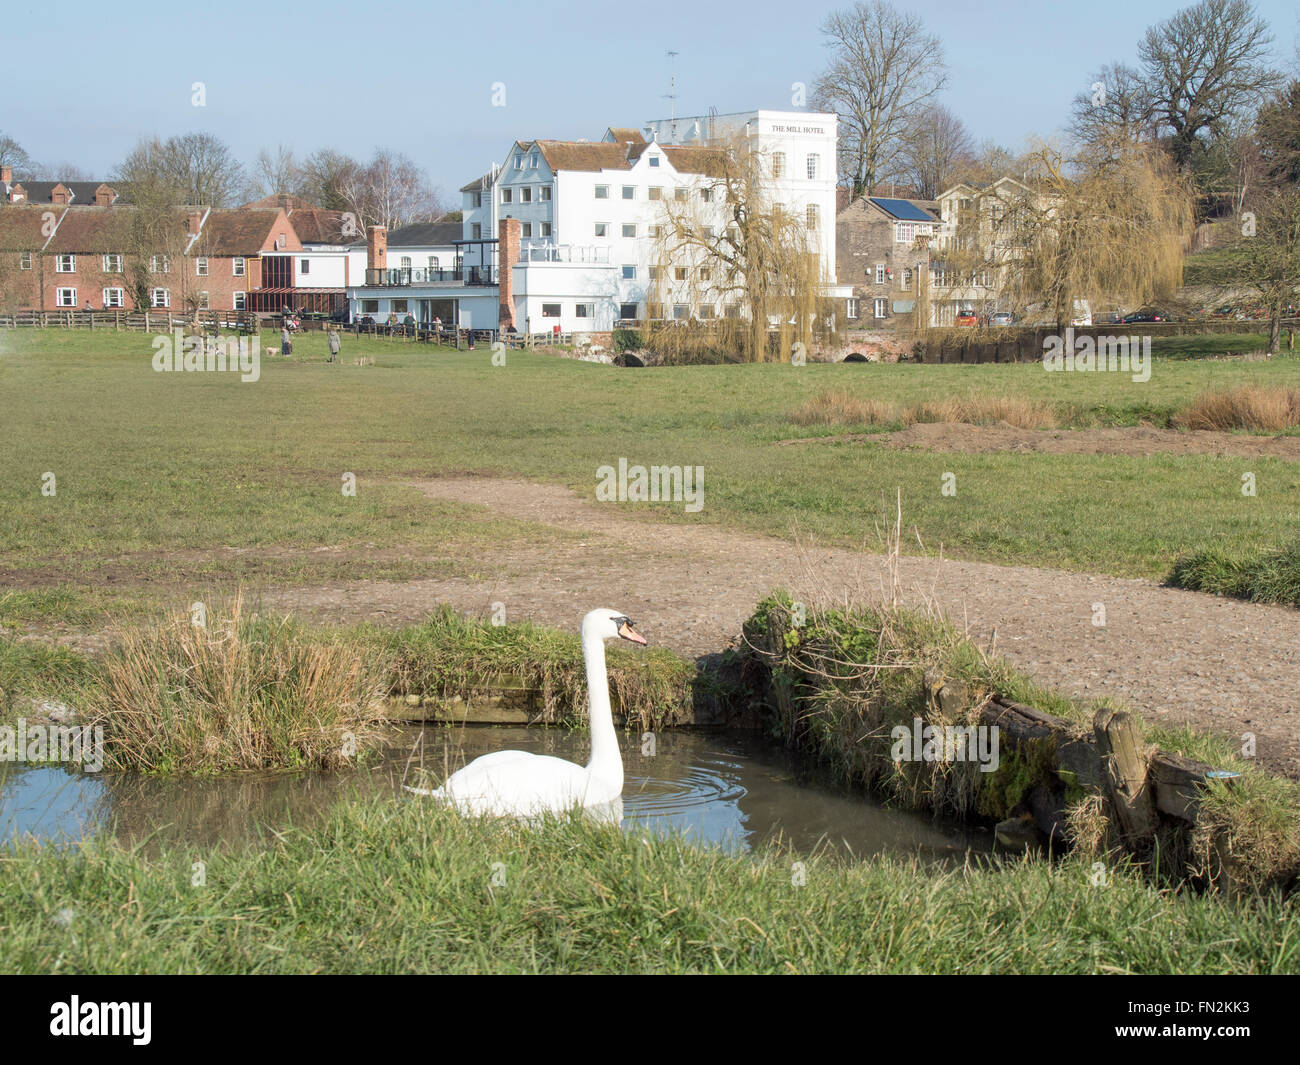 A swan swimming in a stream on Freeman's Common in Sudbury, Suffolk, England. Stock Photo